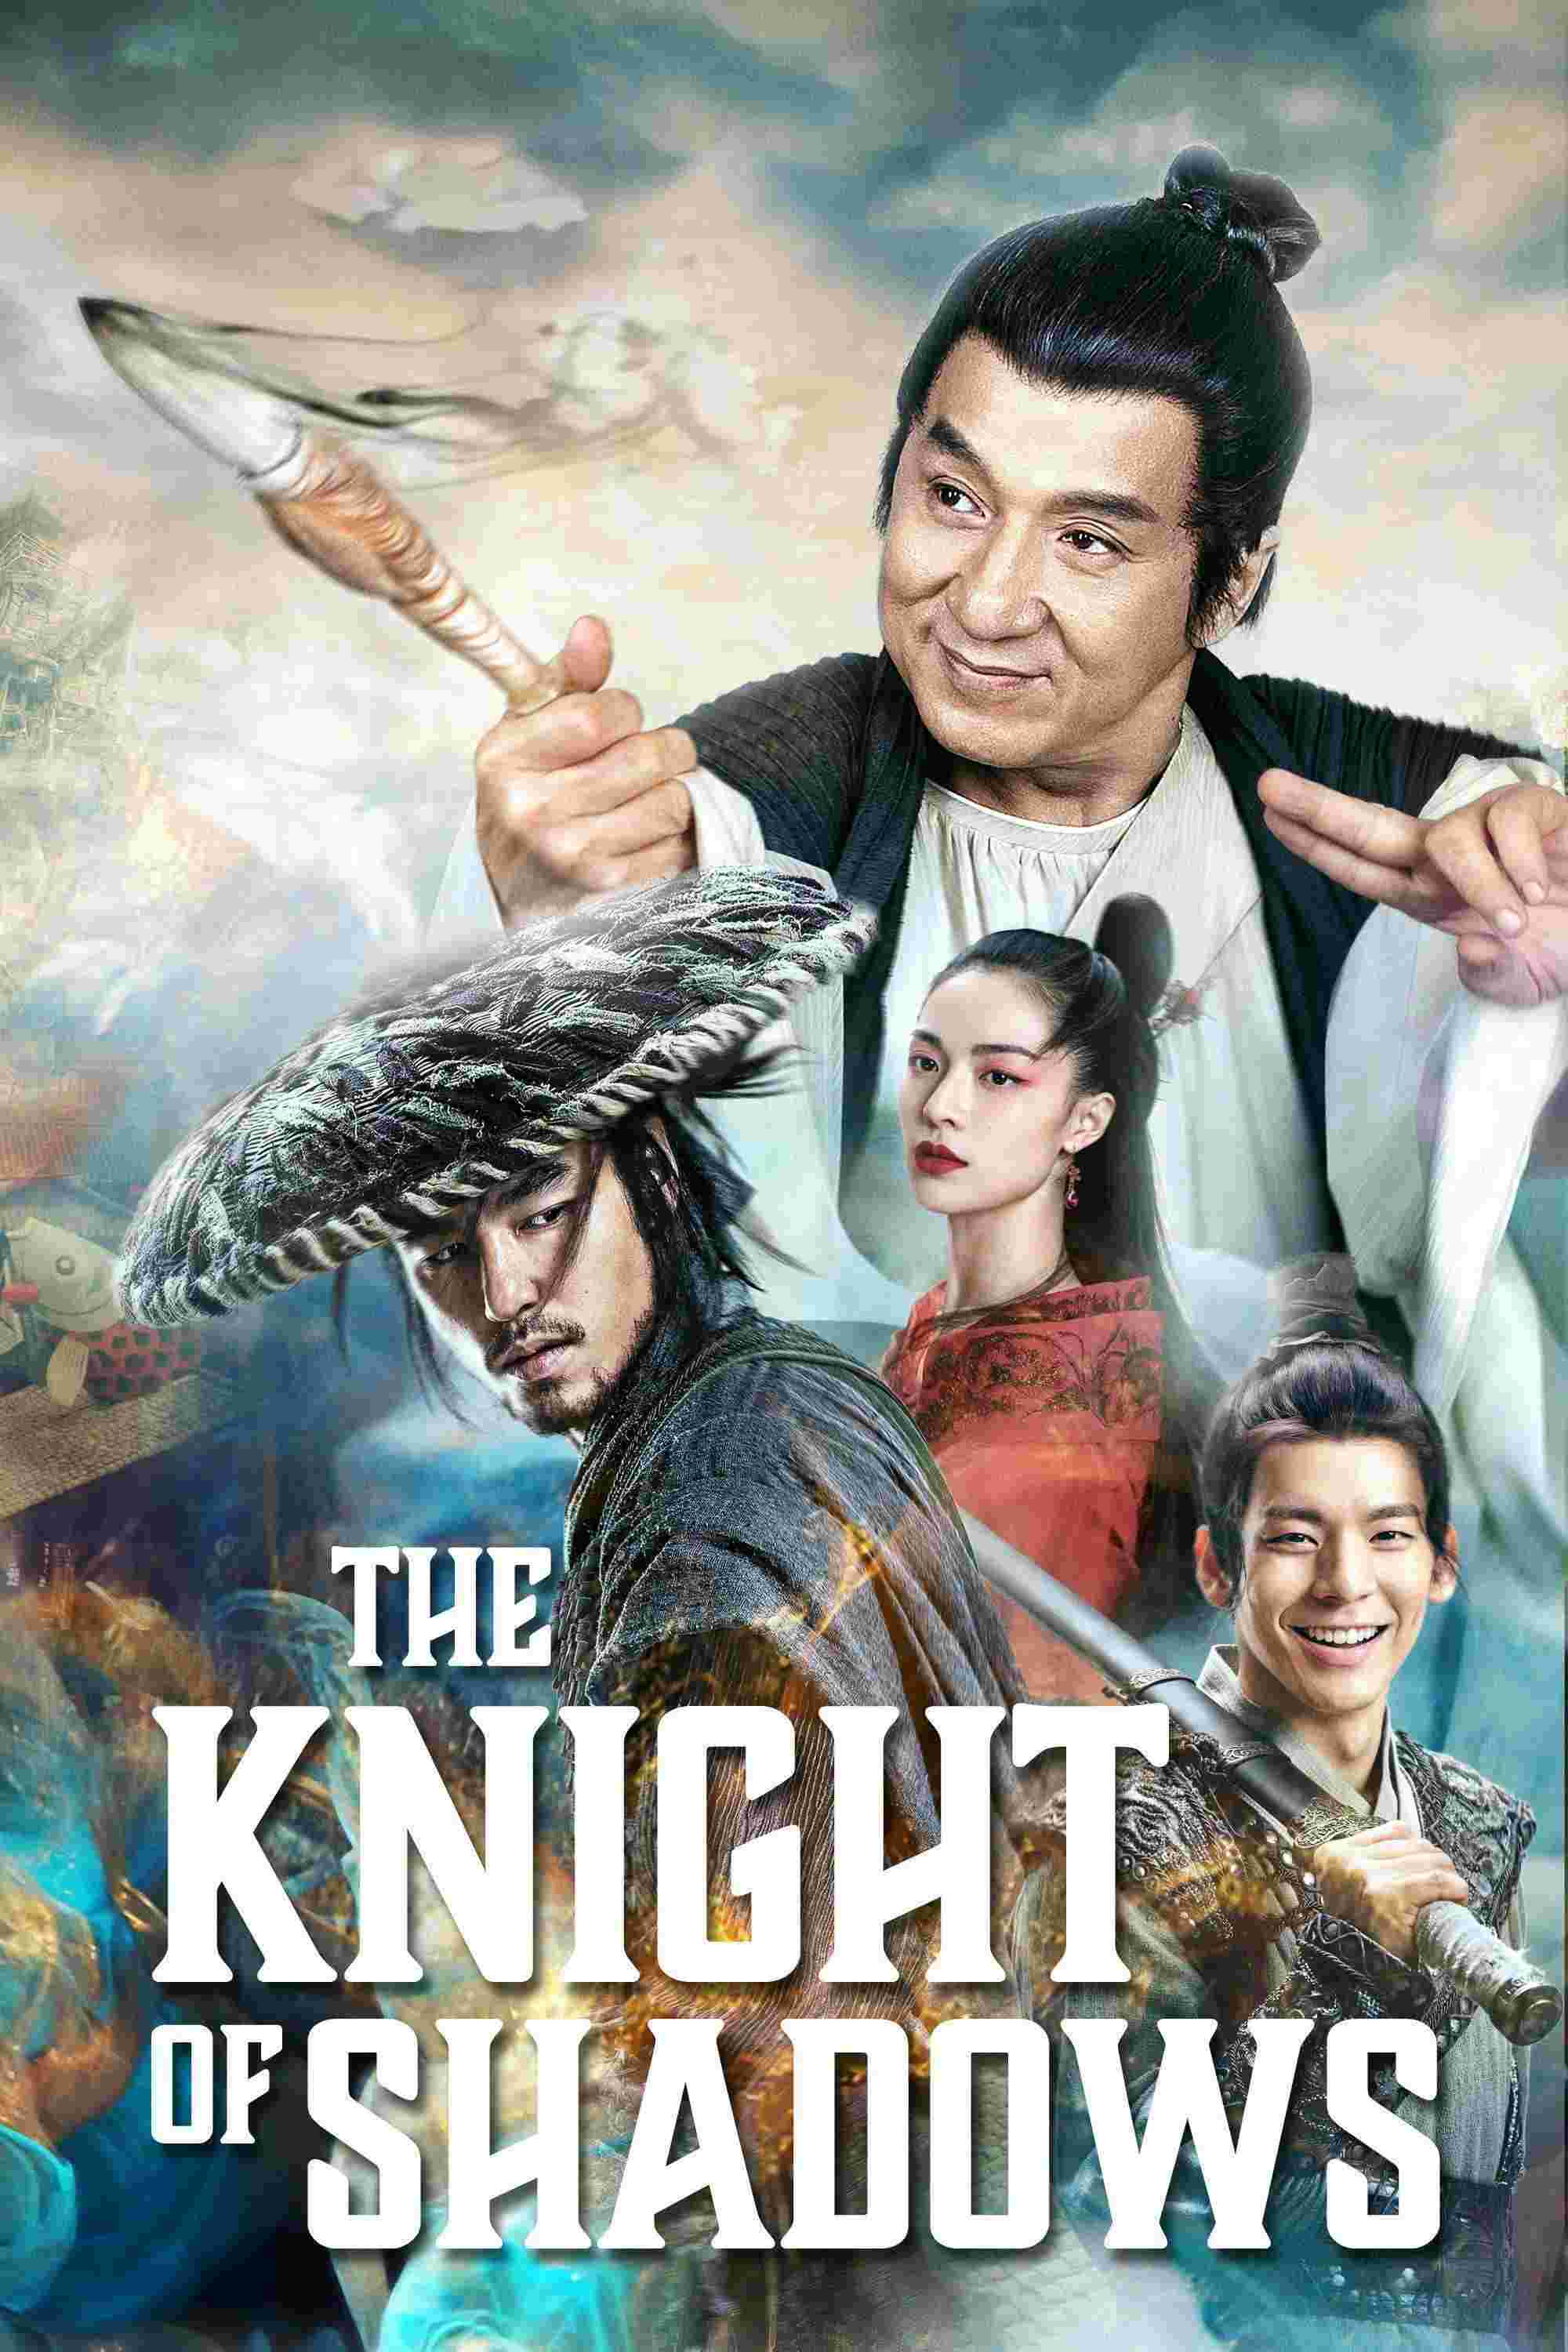 The Knight of Shadows: Between Yin and Yang (2019) Jackie Chan